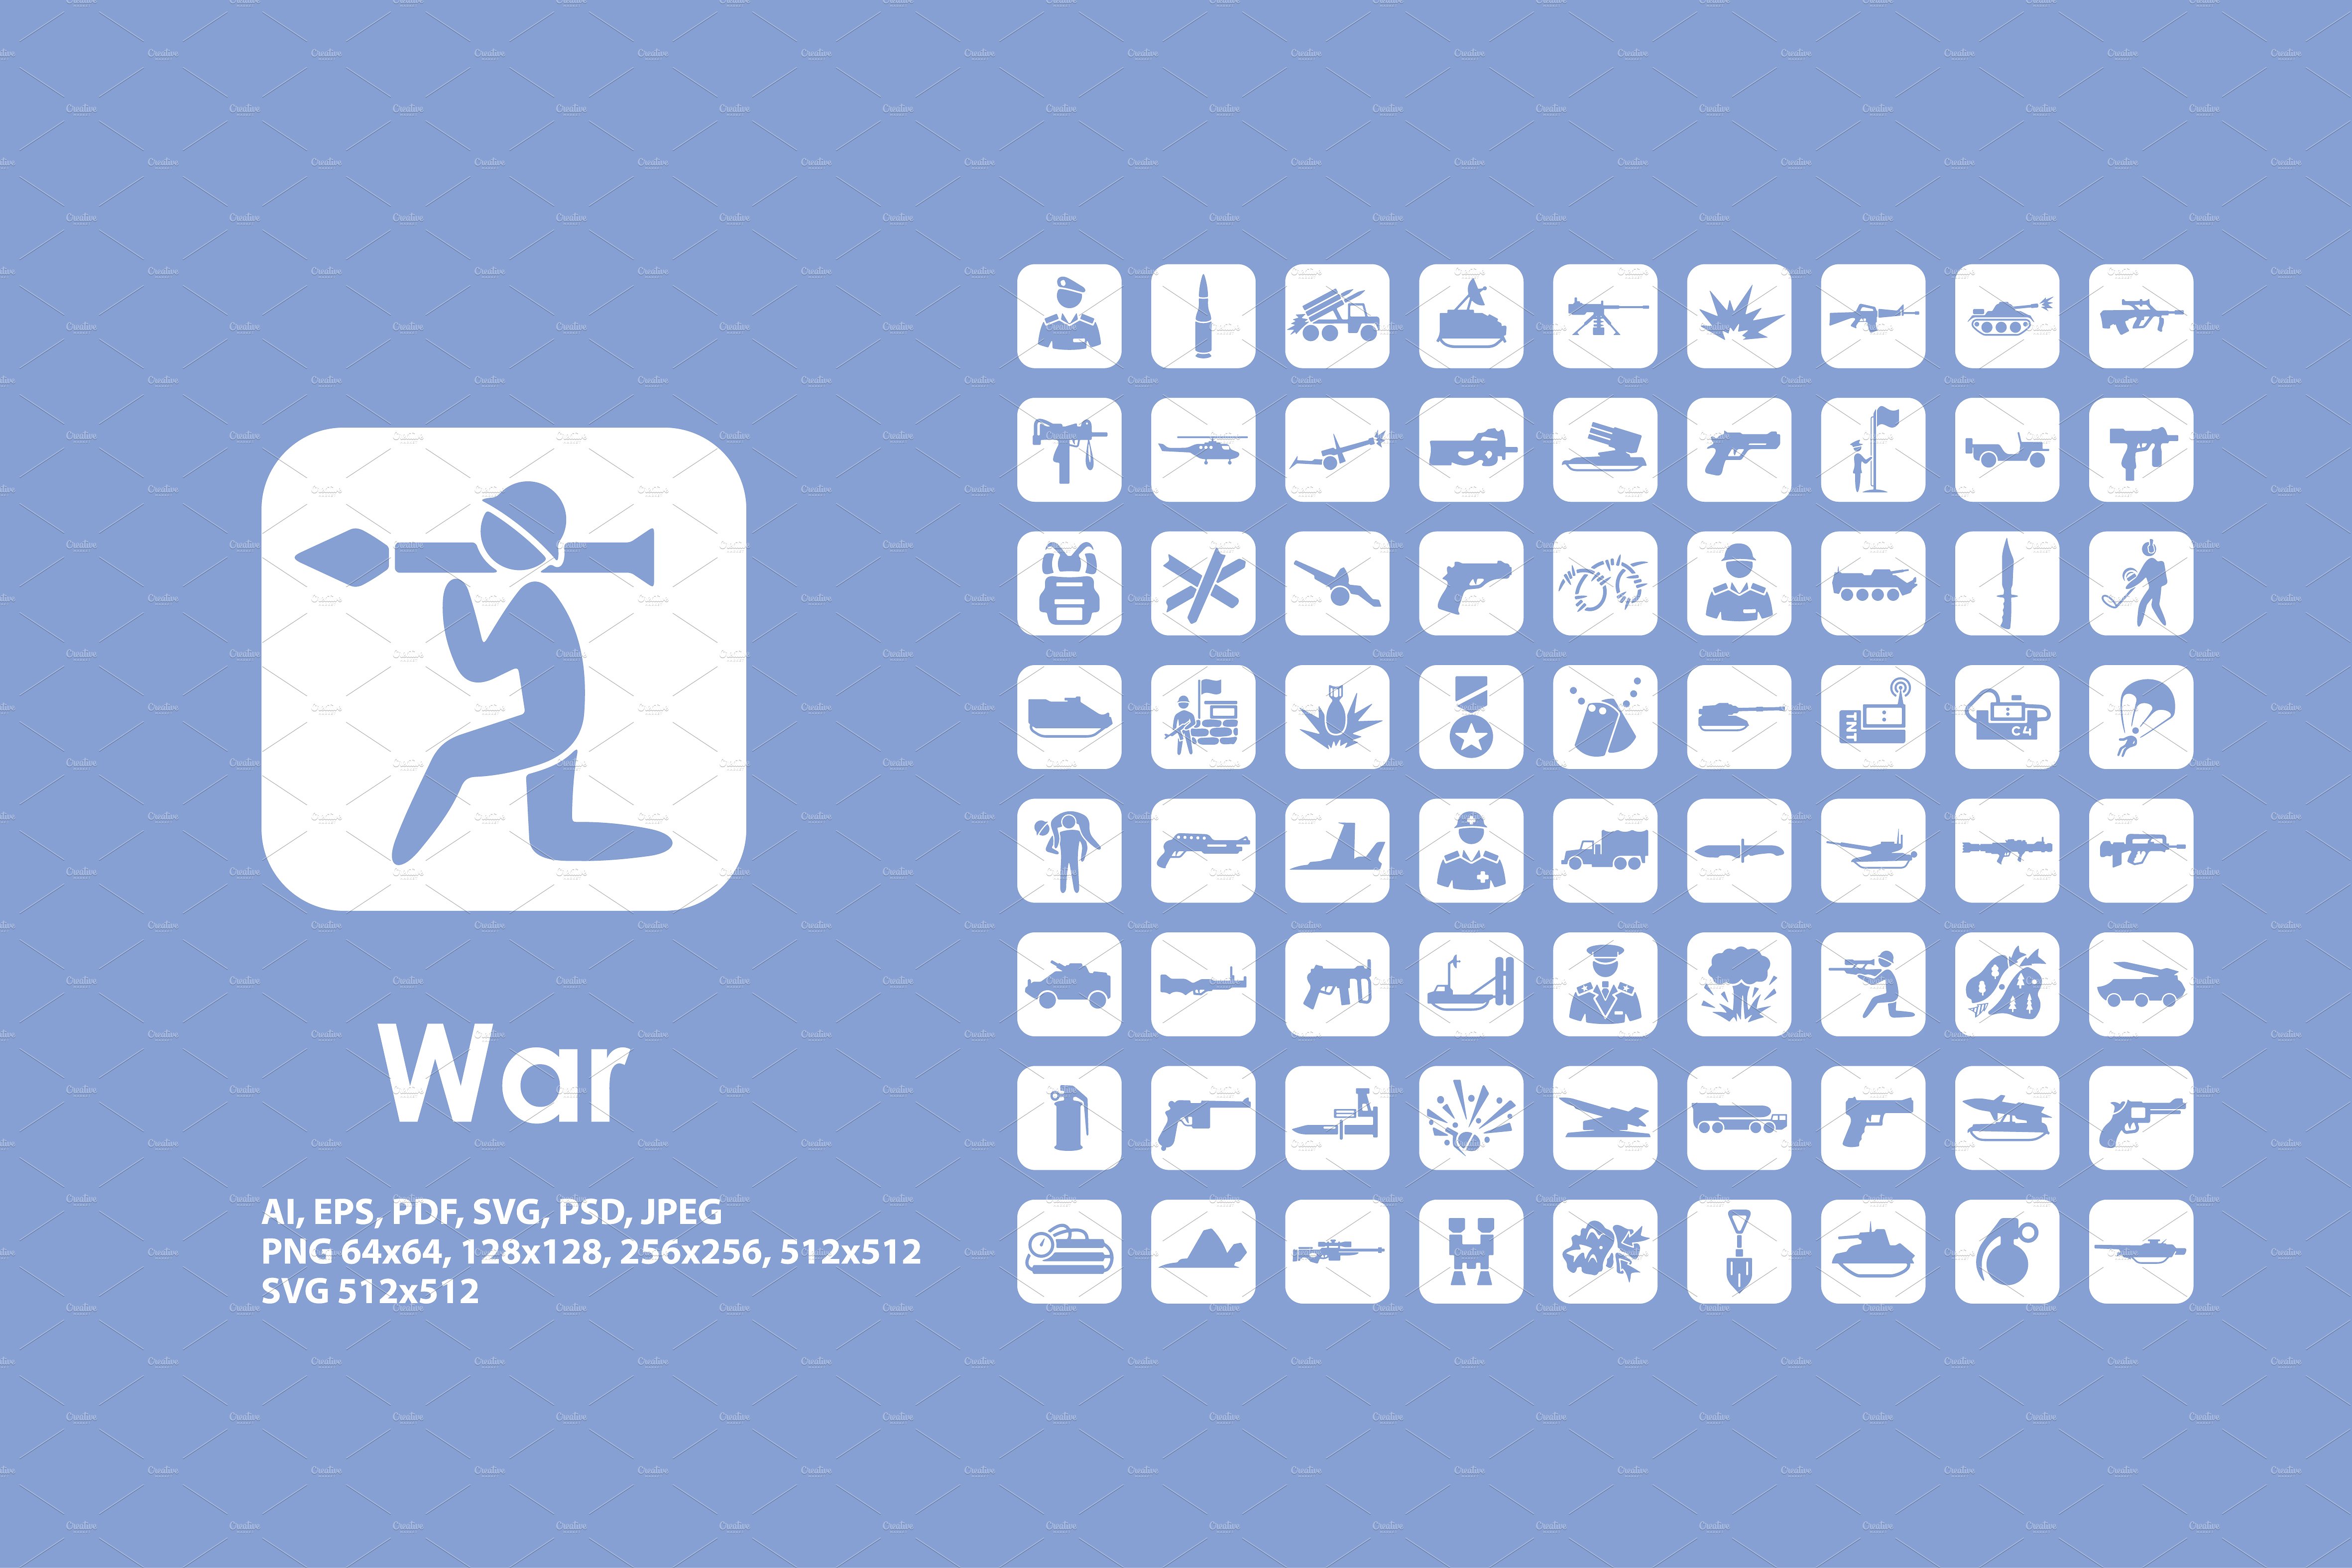 War icons